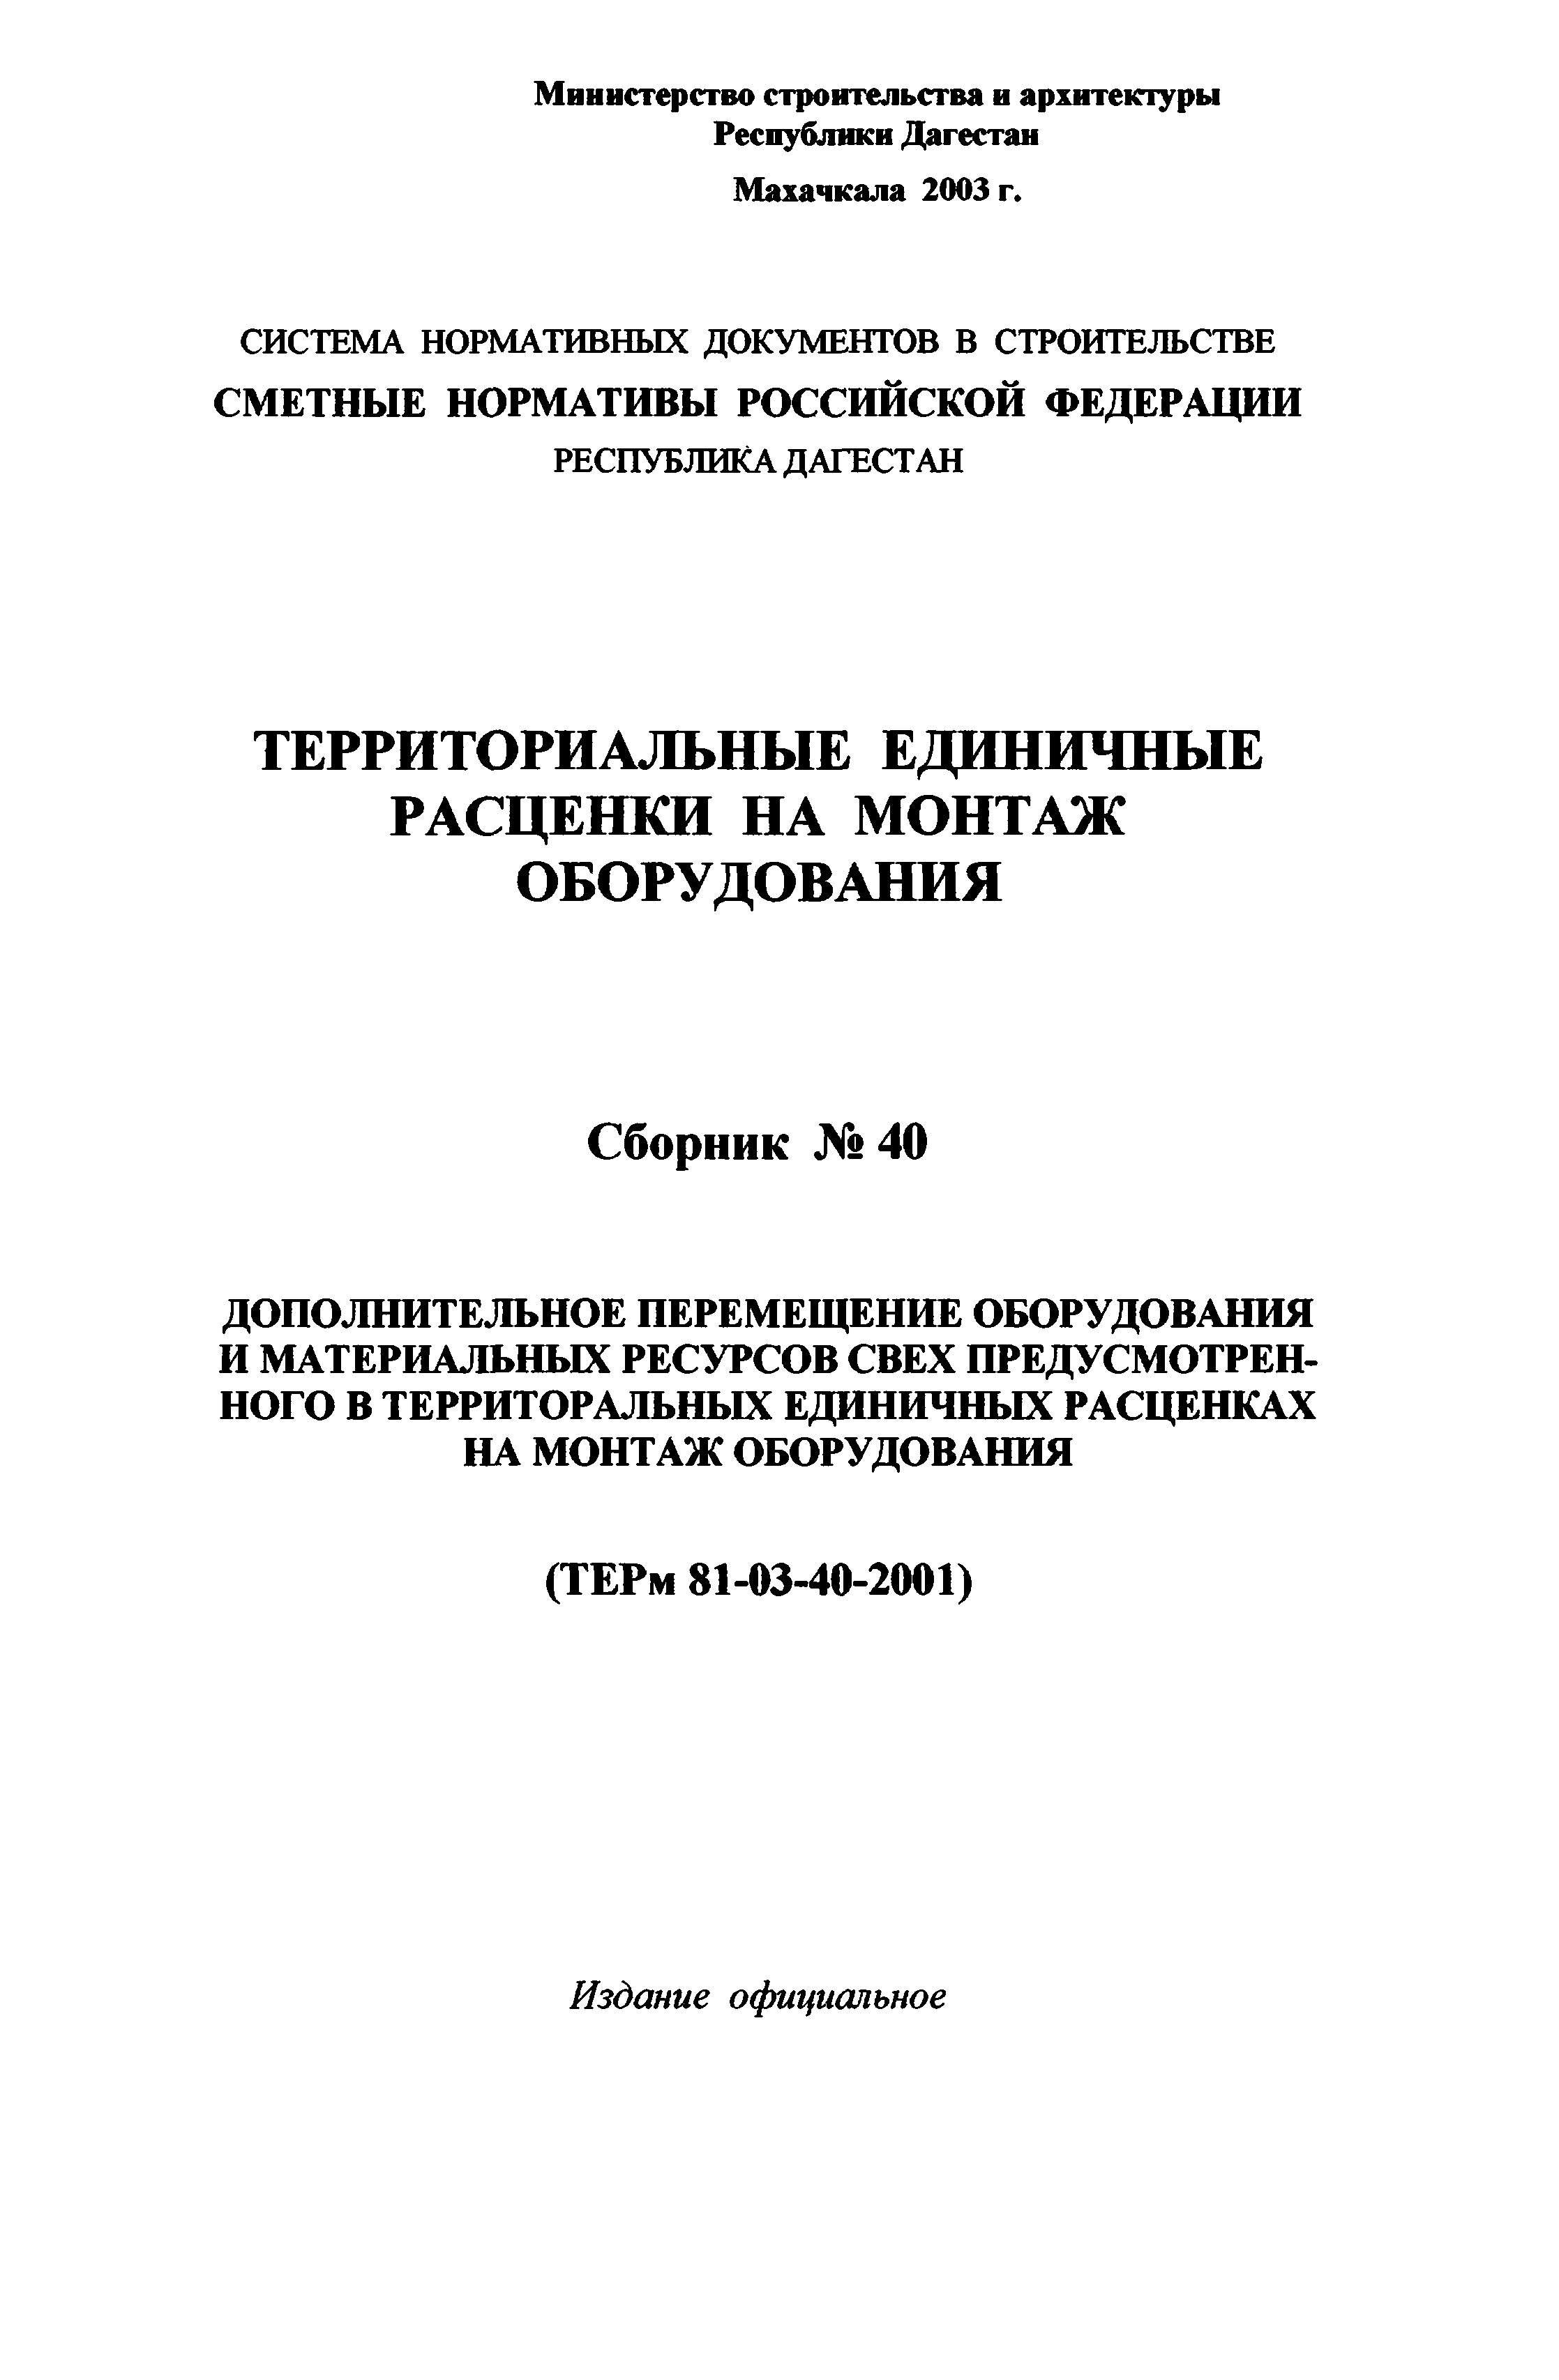 ТЕРм Республика Дагестан 2001-40